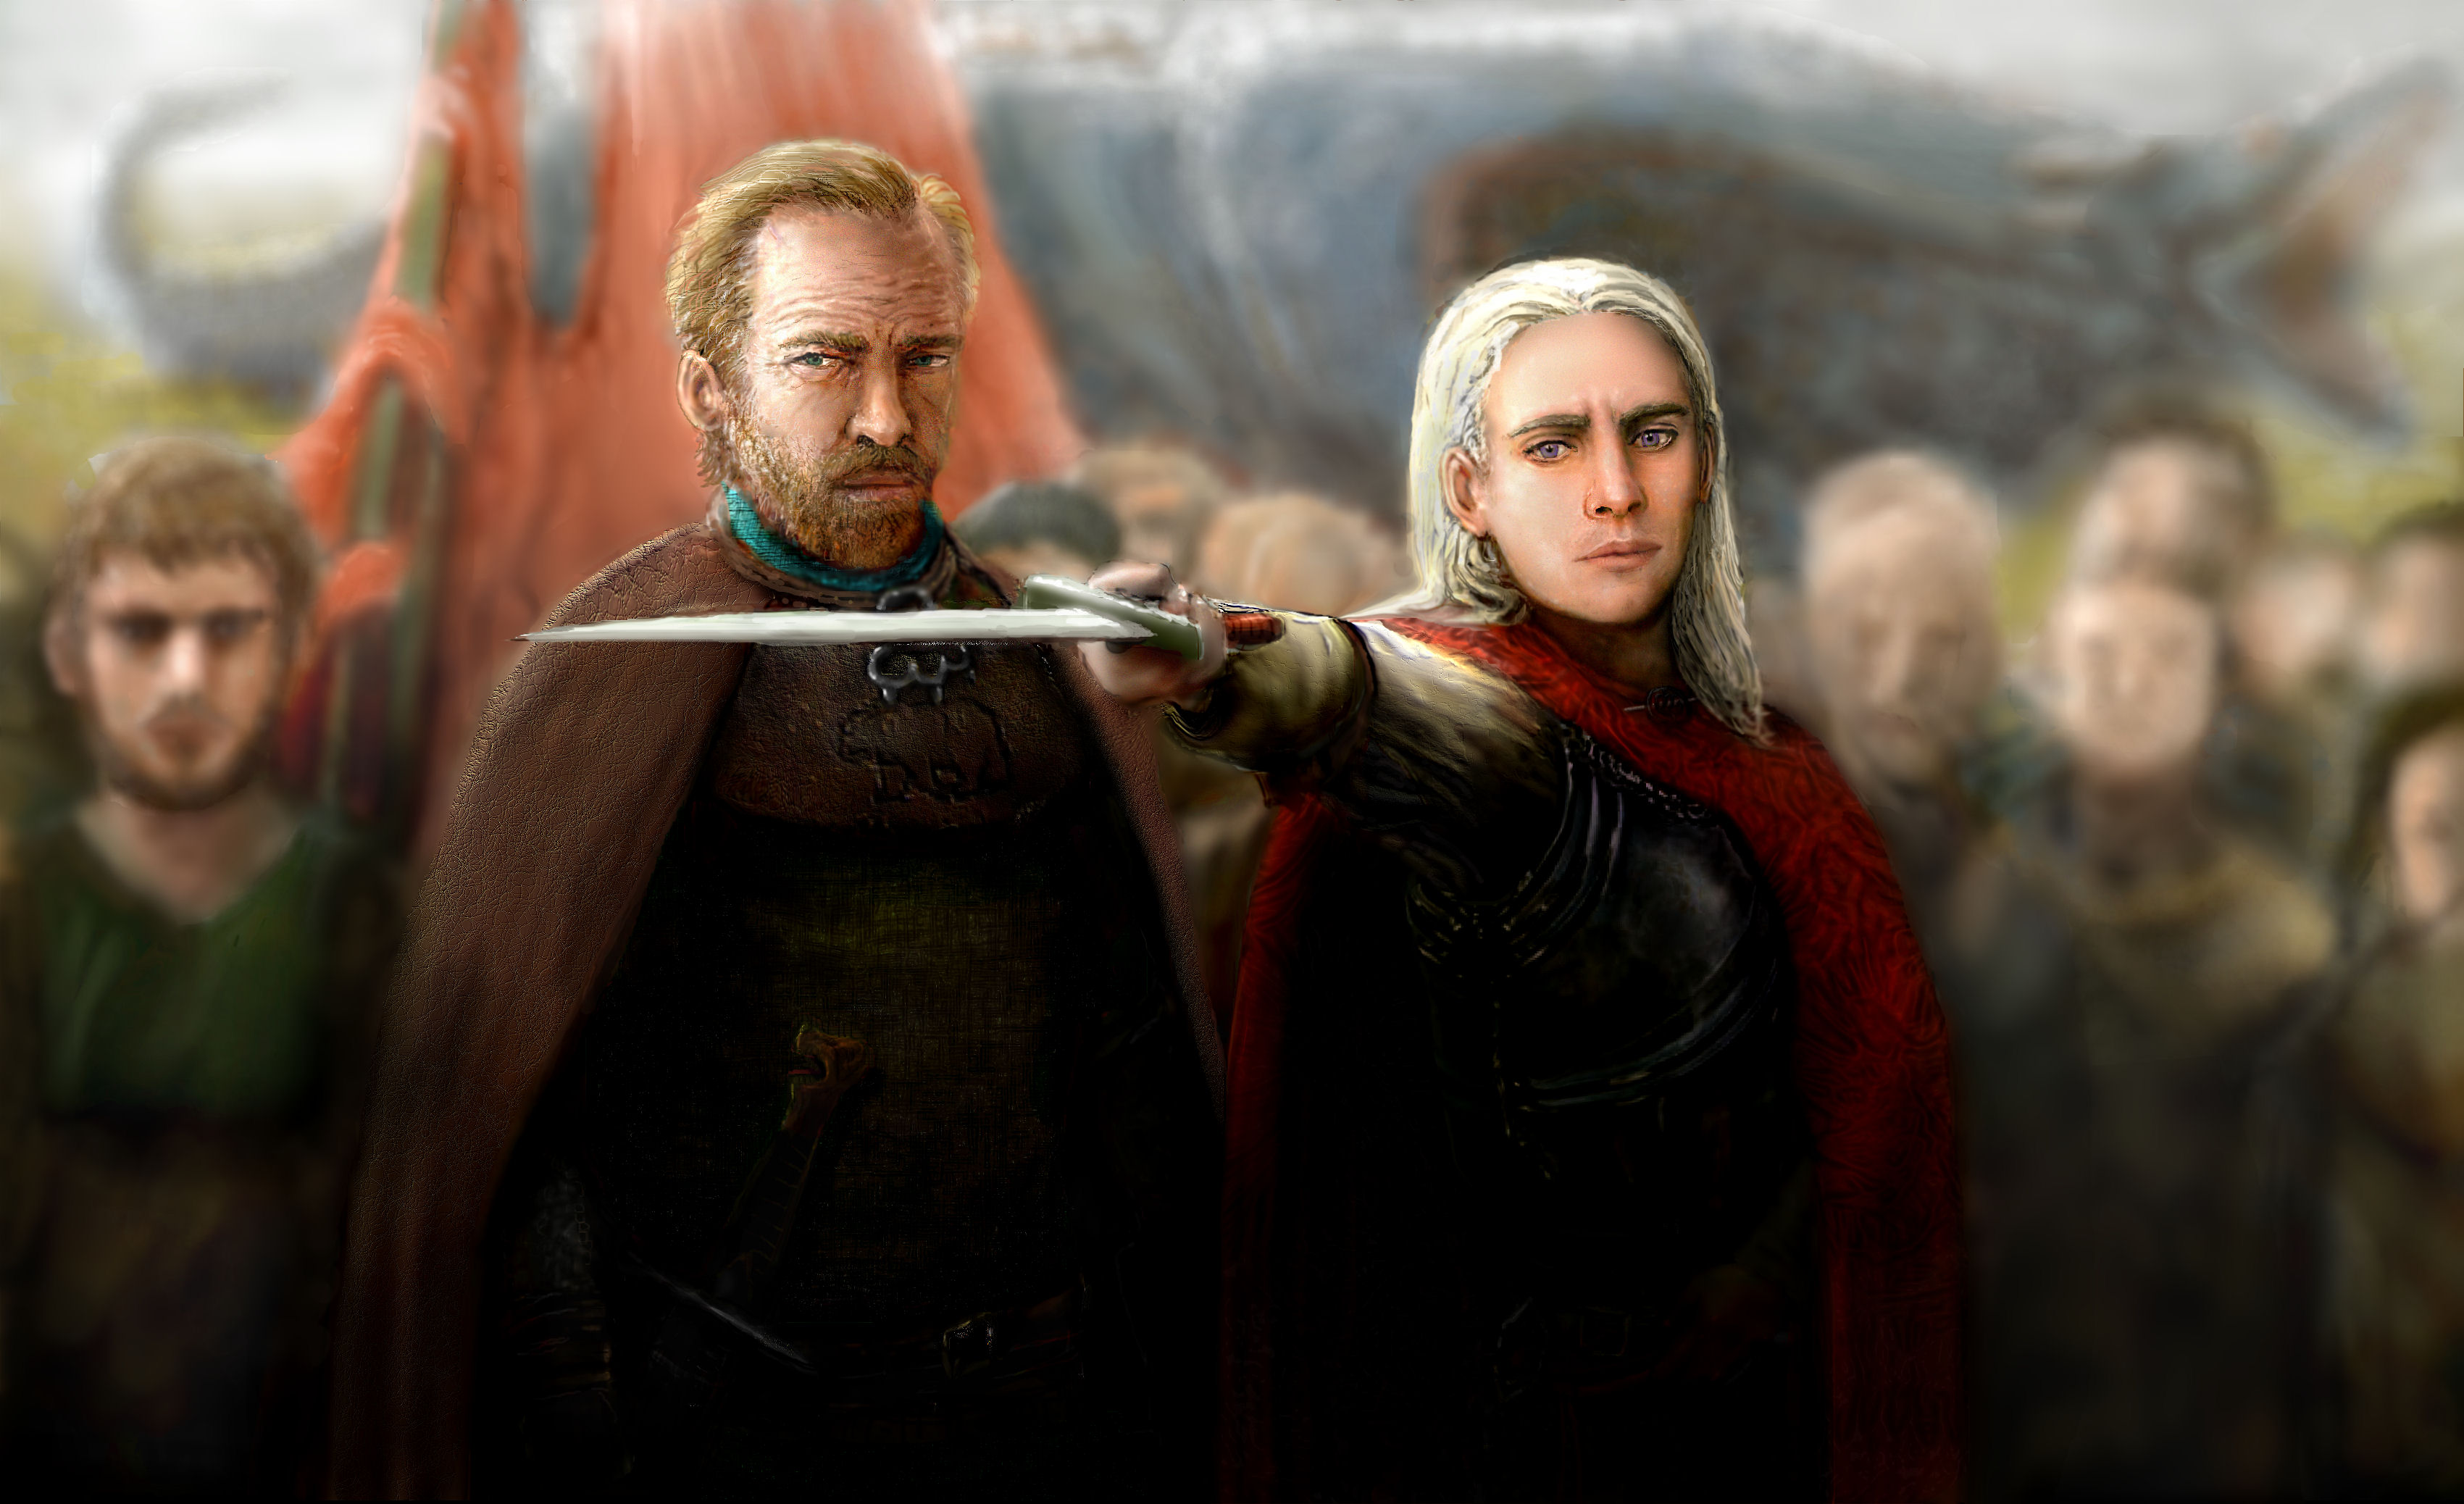 Jorah Mormont Viserys Targaryen 3401x2076